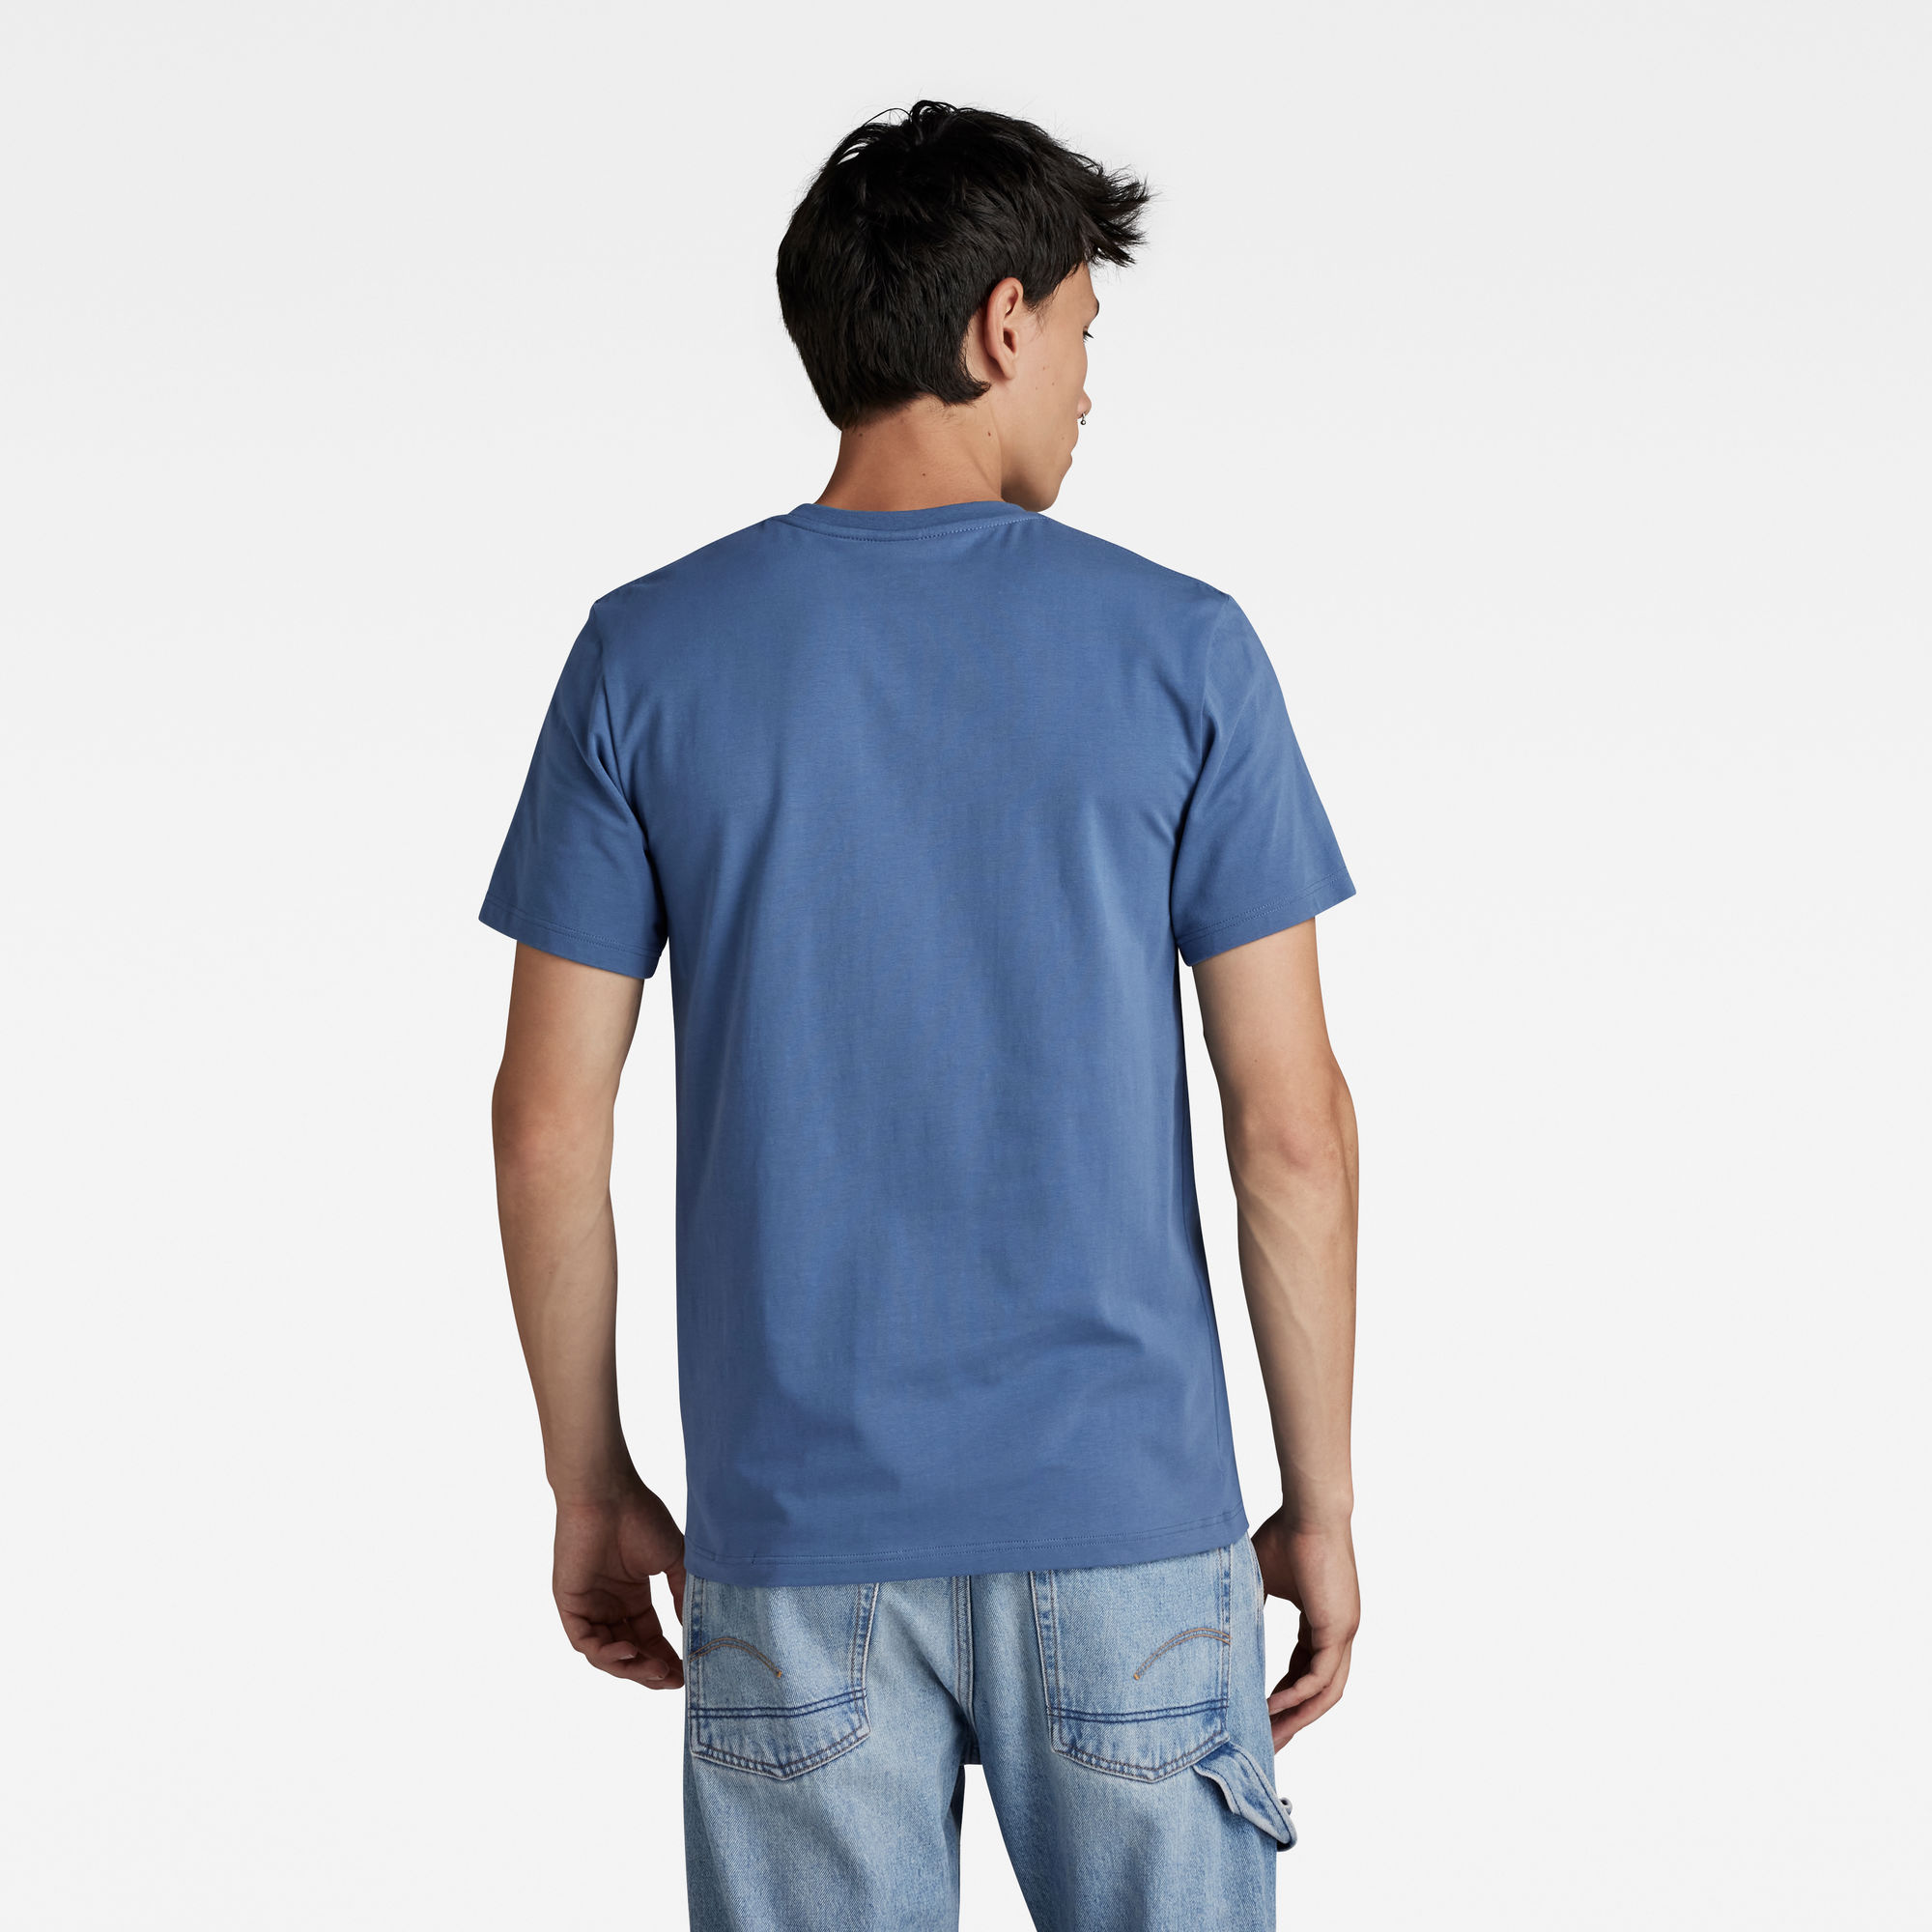 G-Star RAW Slim Base T-Shirt Midden blauw Heren